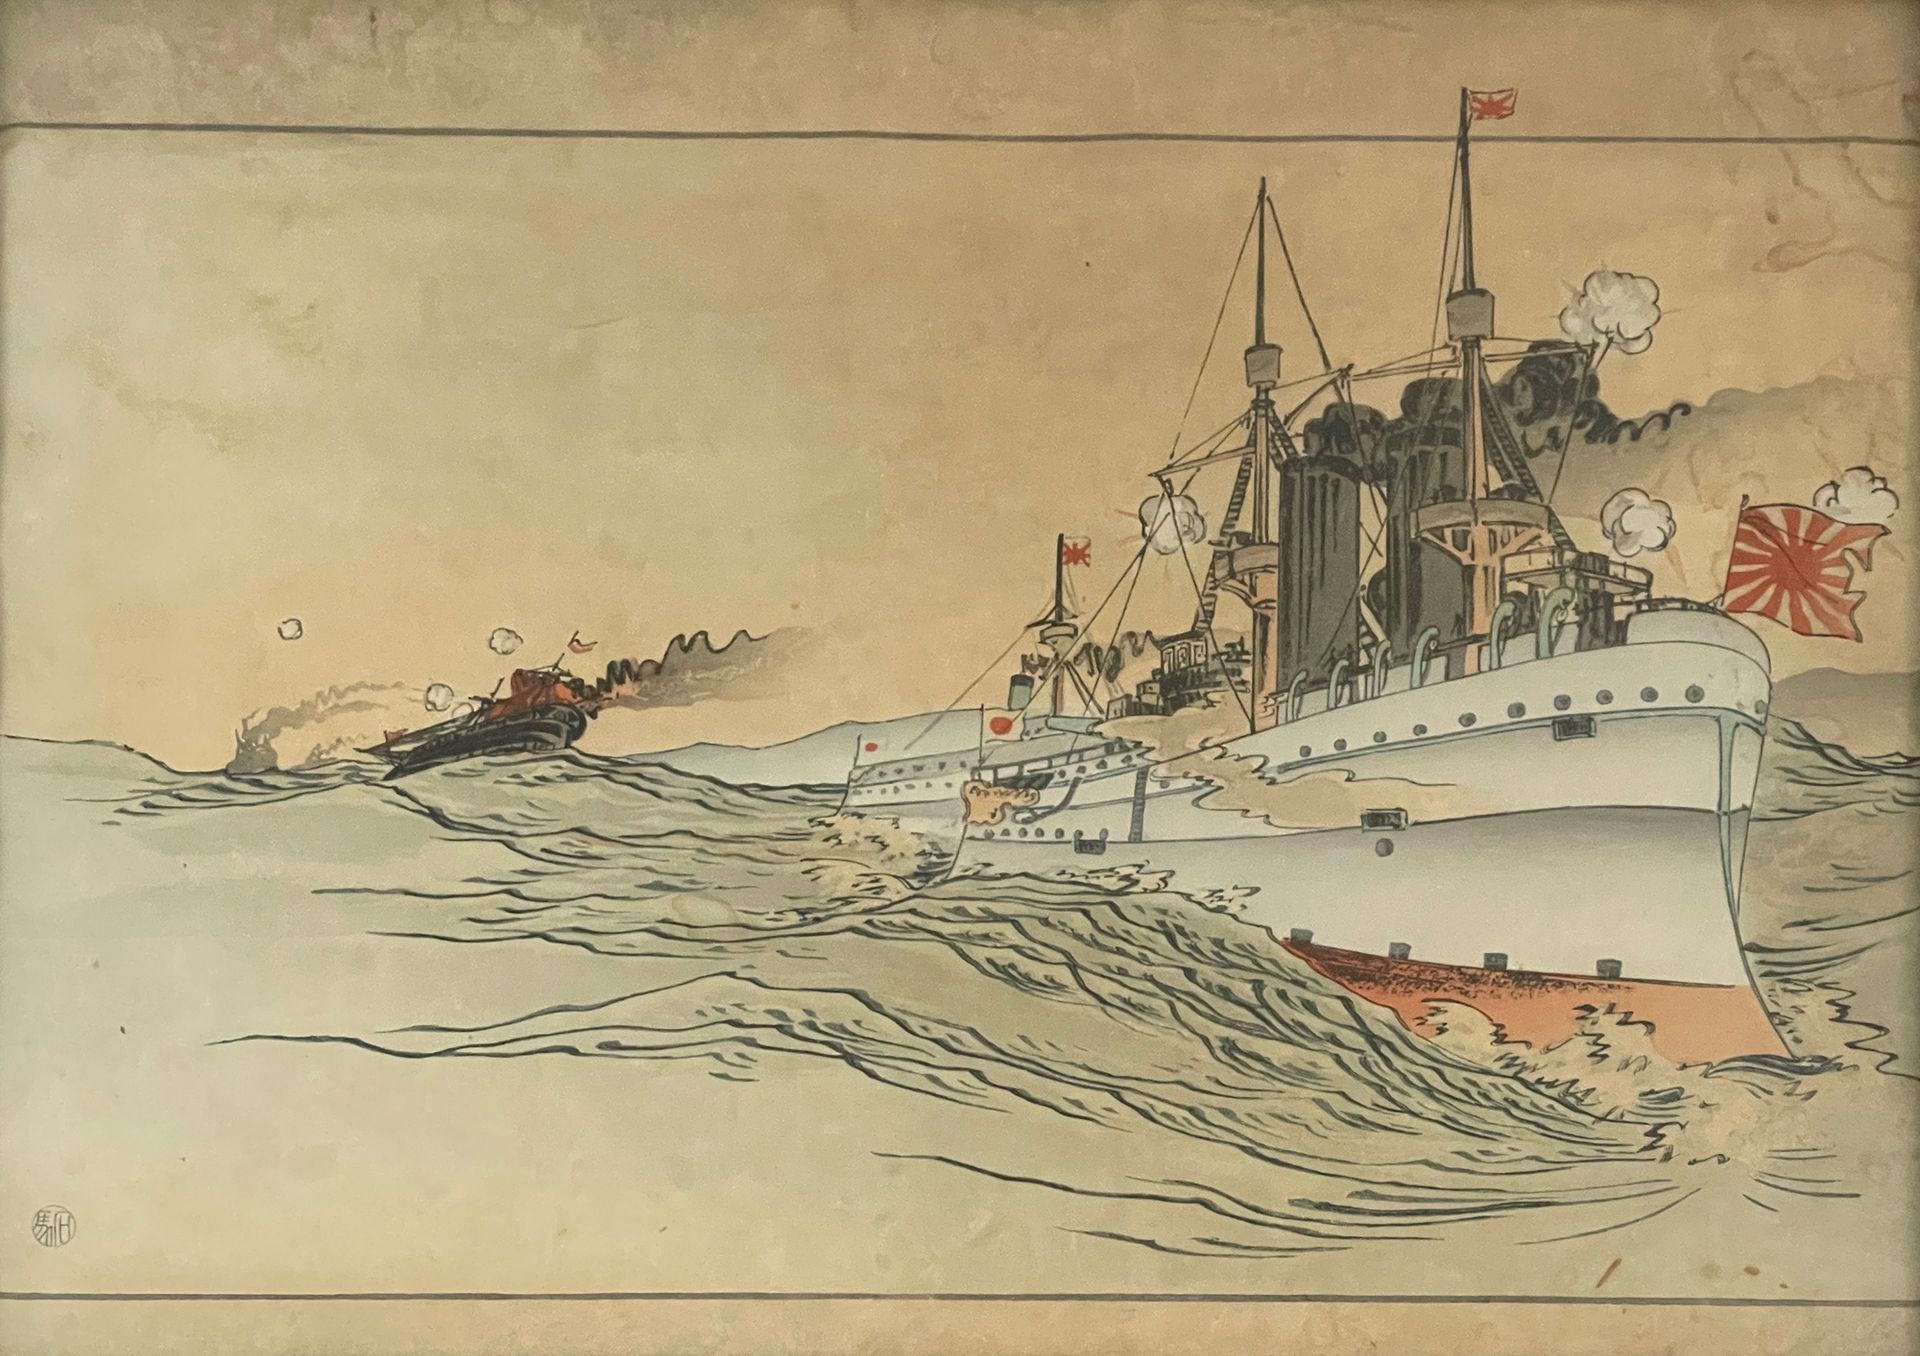 ECOLE FRANCAISE 日本巡洋舰
水墨画，左下方有艺术家的签名
25 x 33 cm
(潮湿和褶皱)